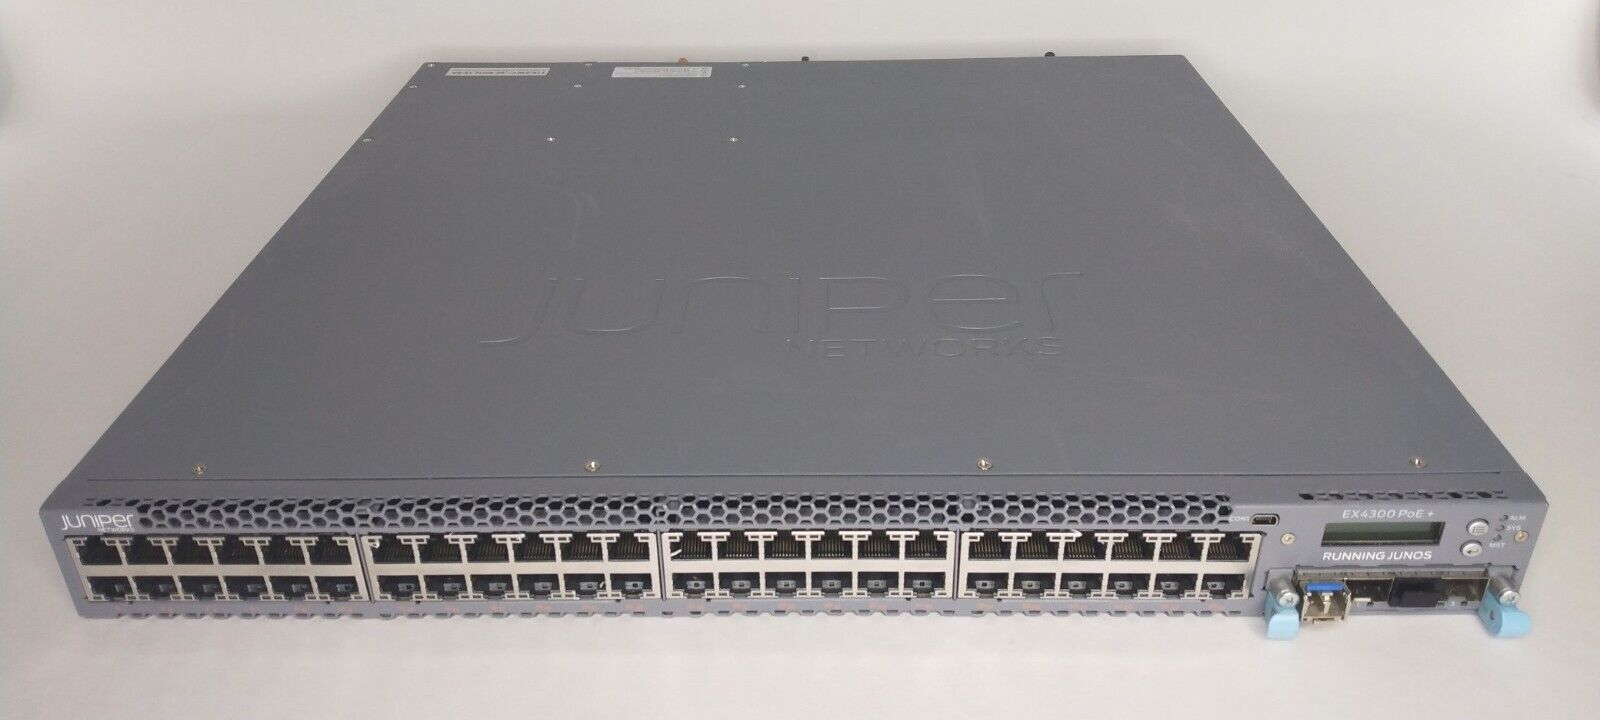 Juniper Networks EX Series EX4300-48P 48-Port 10/100/1000 POE+ Rack Switch